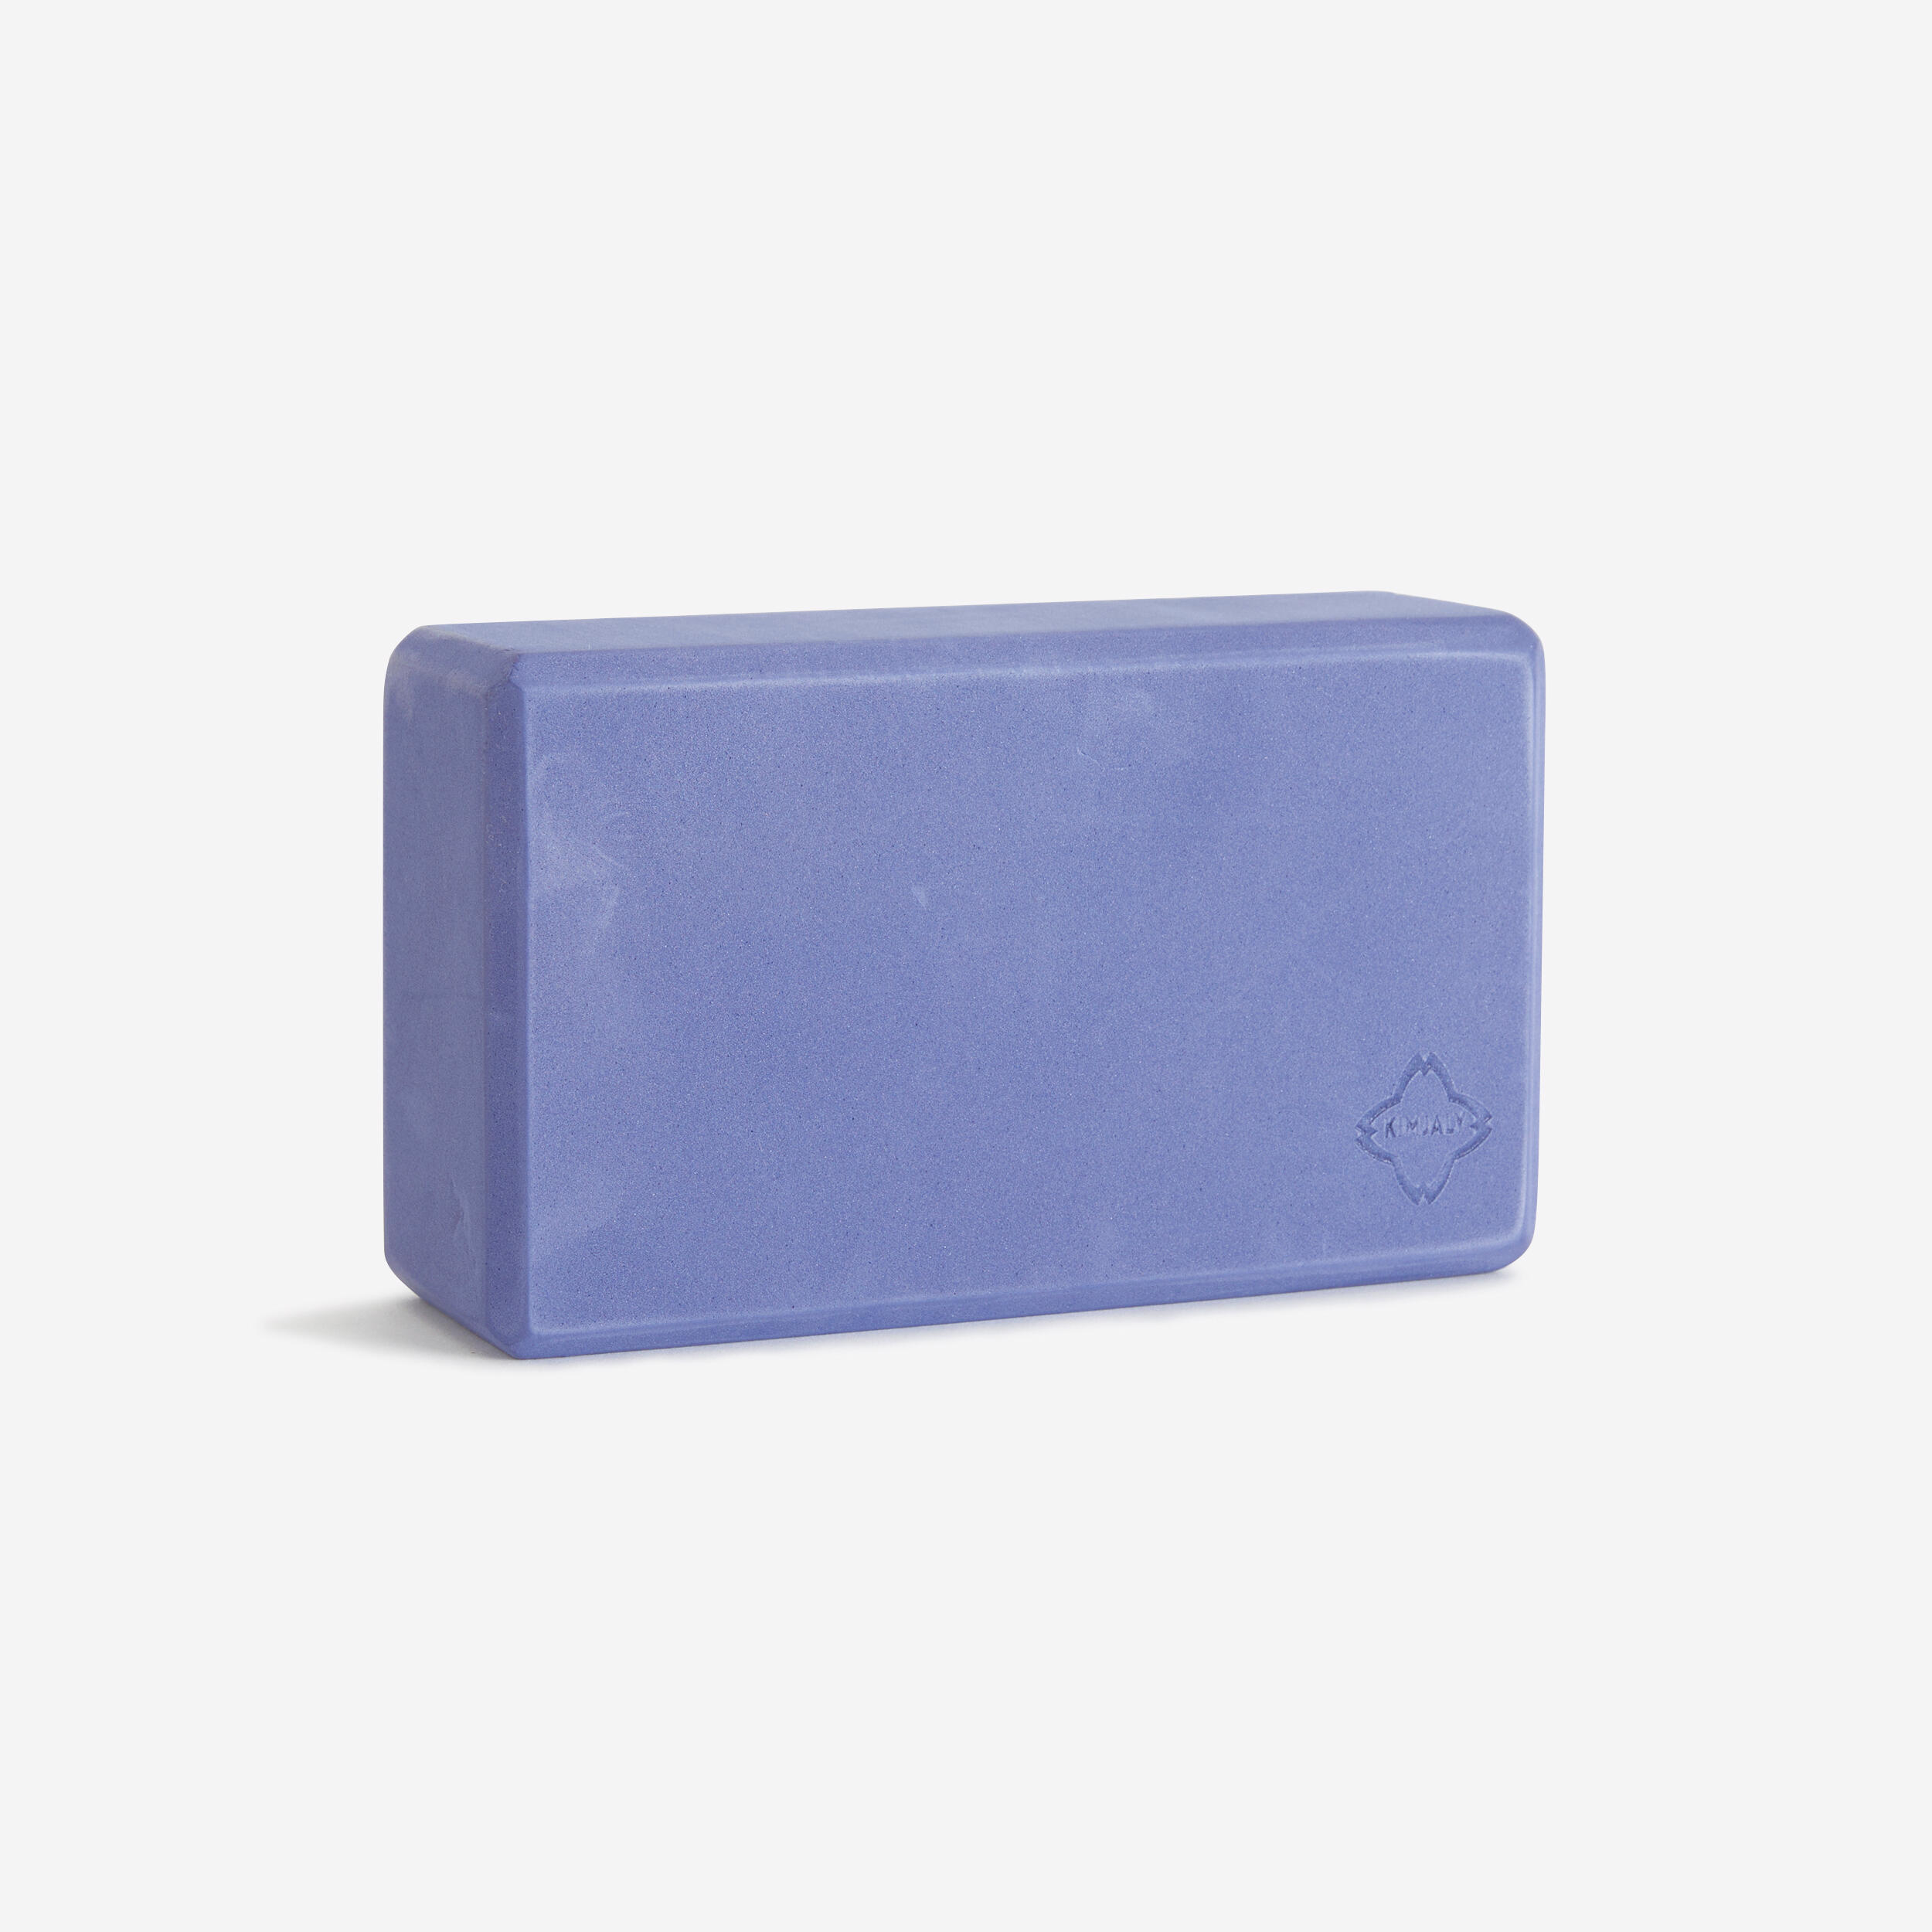 KIMJALY Yoga Foam Block - Blue